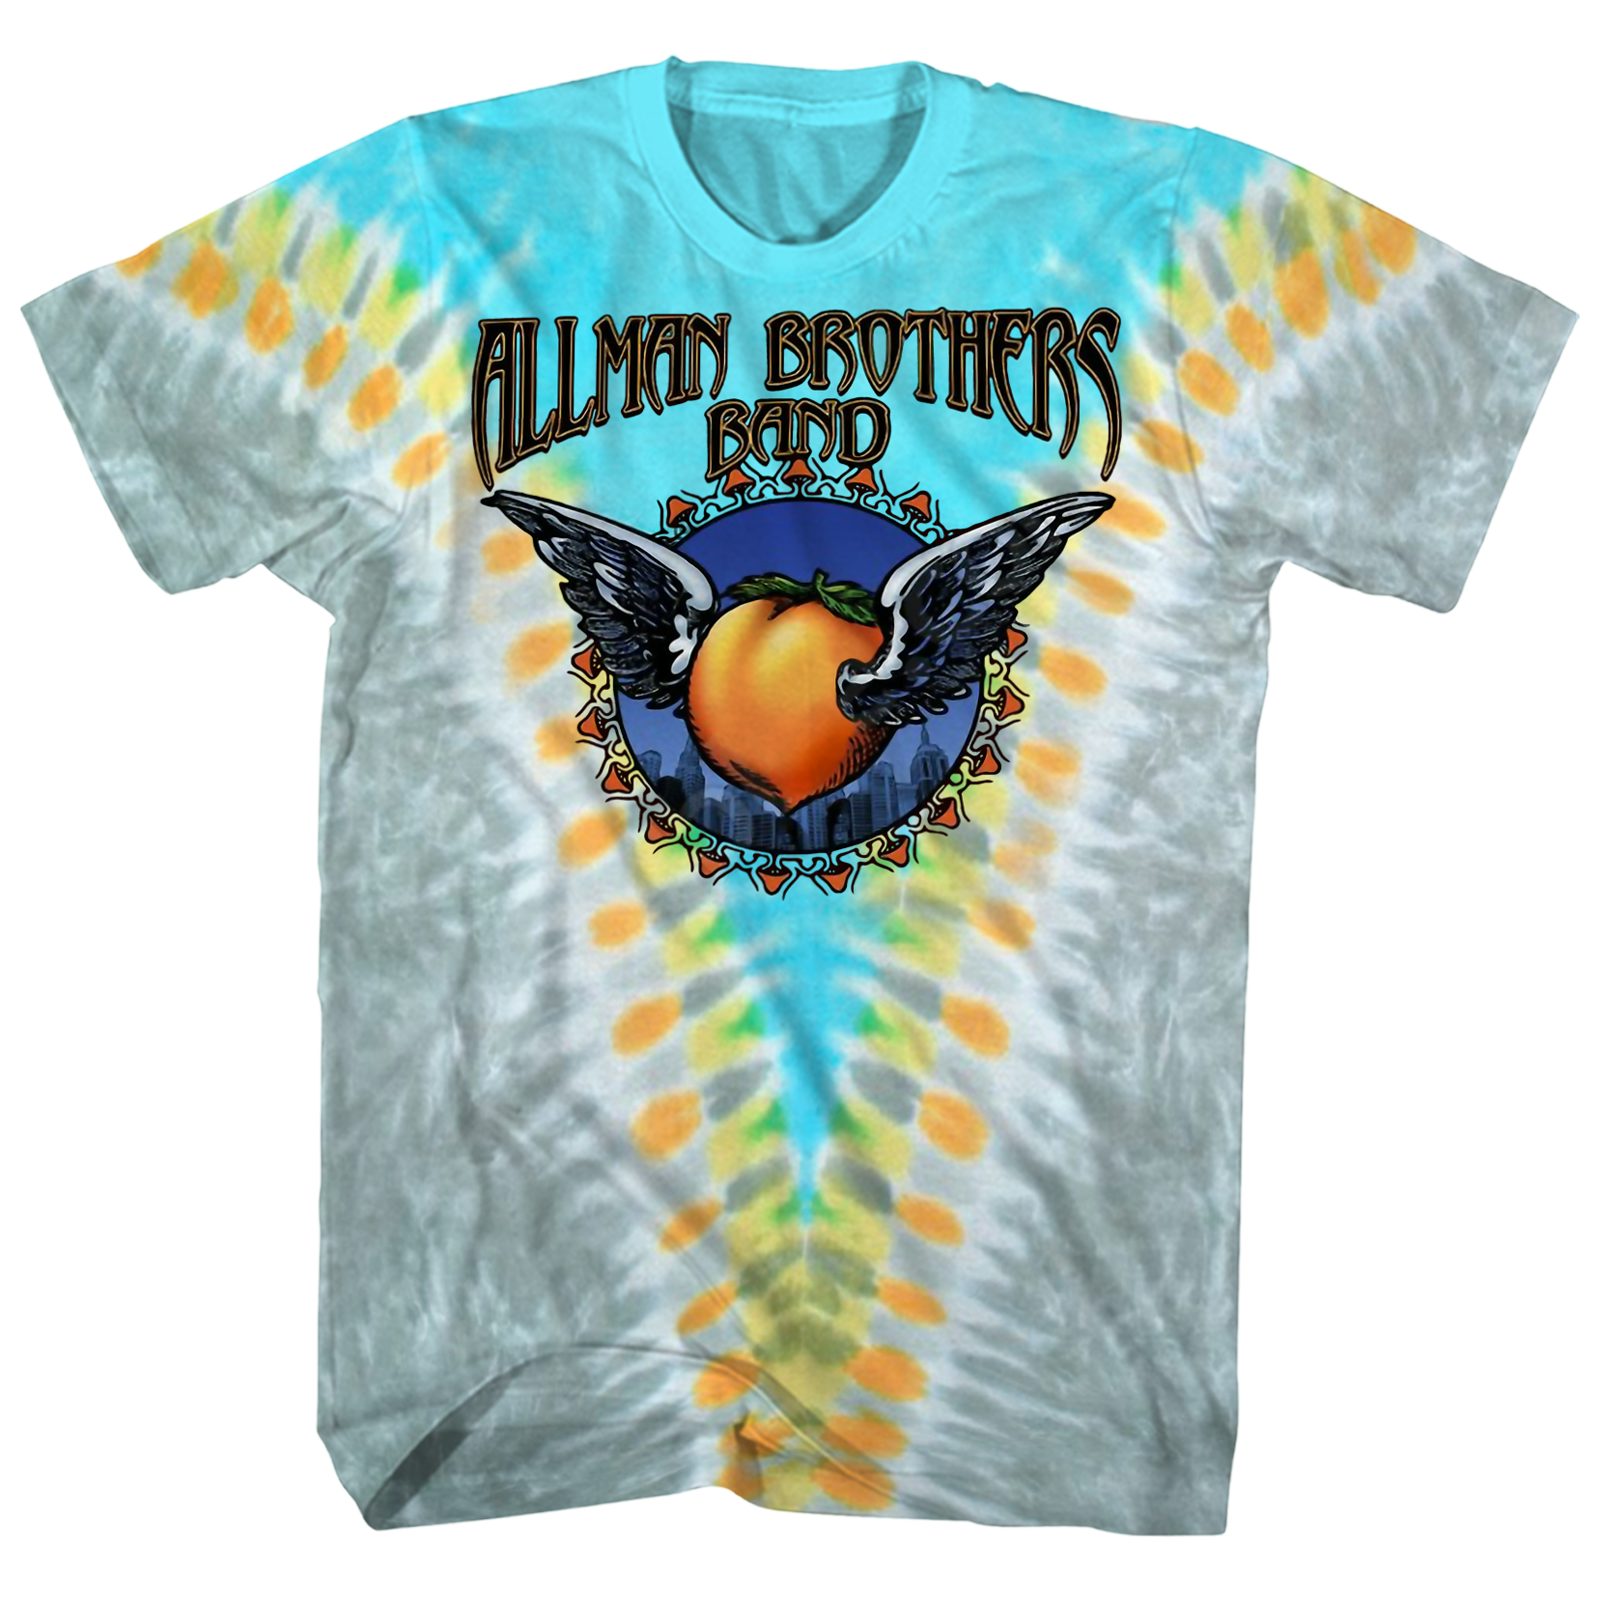 allman brothers band shirt